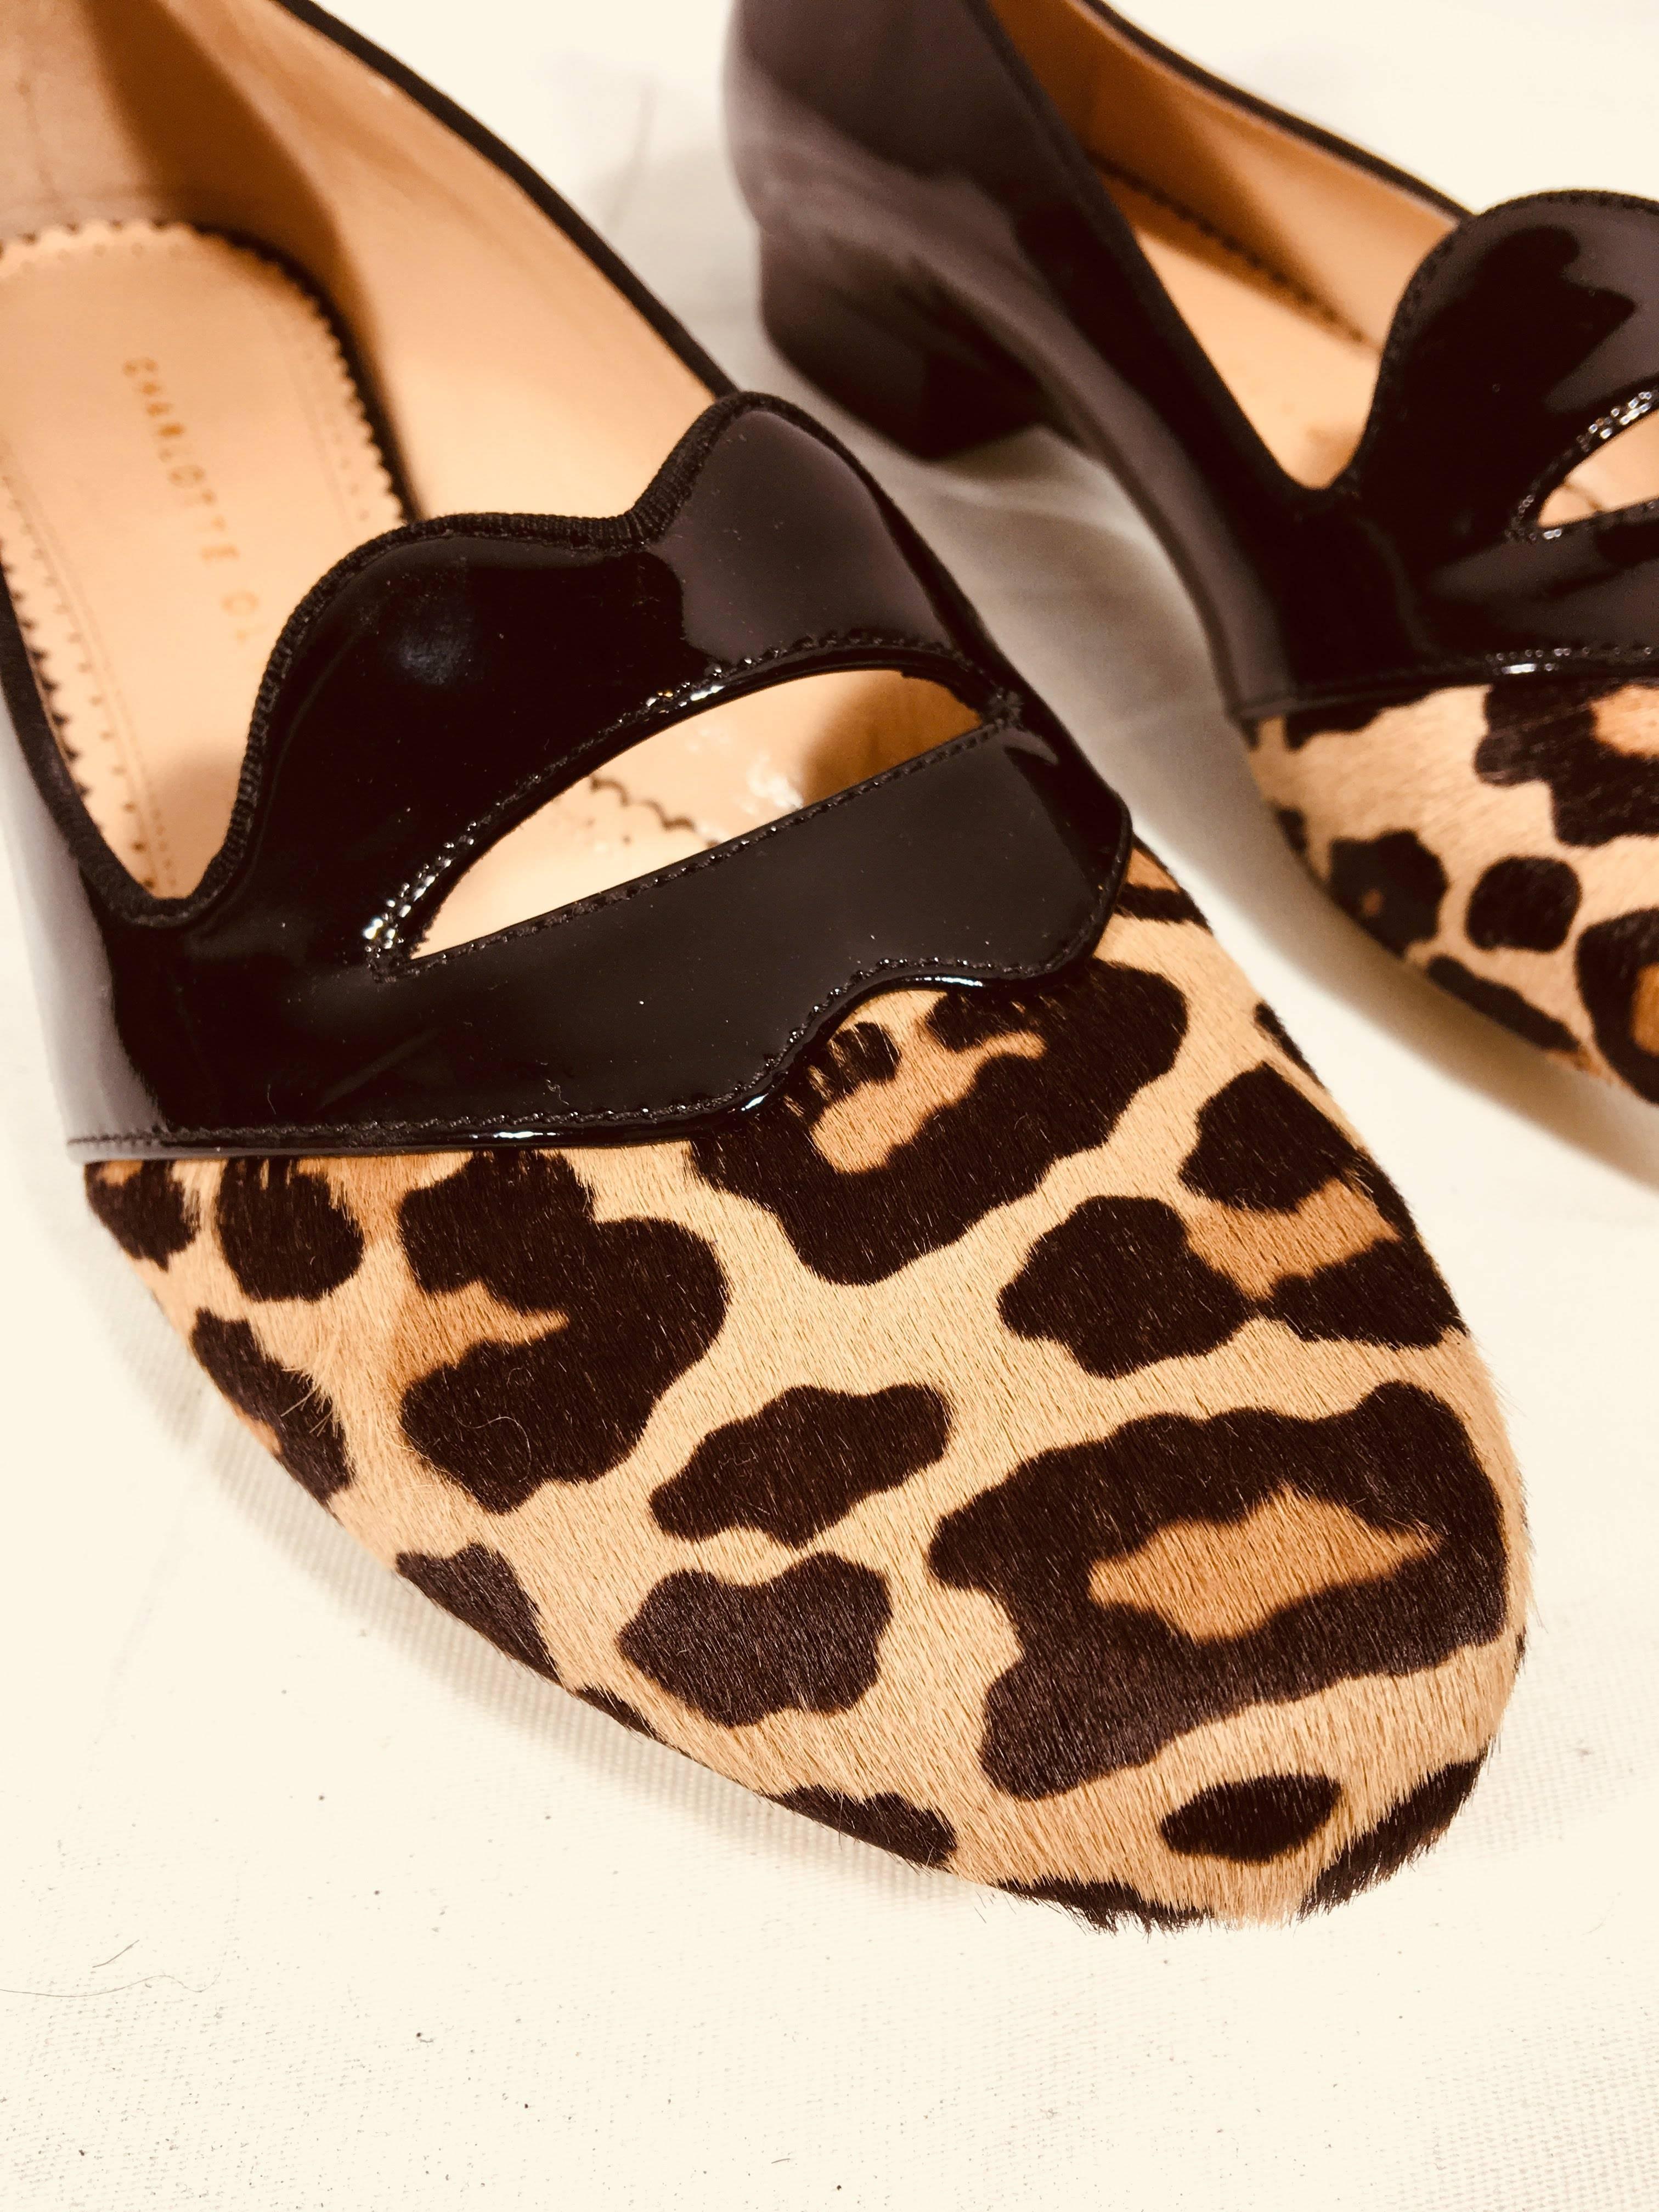 leopard loafers womens